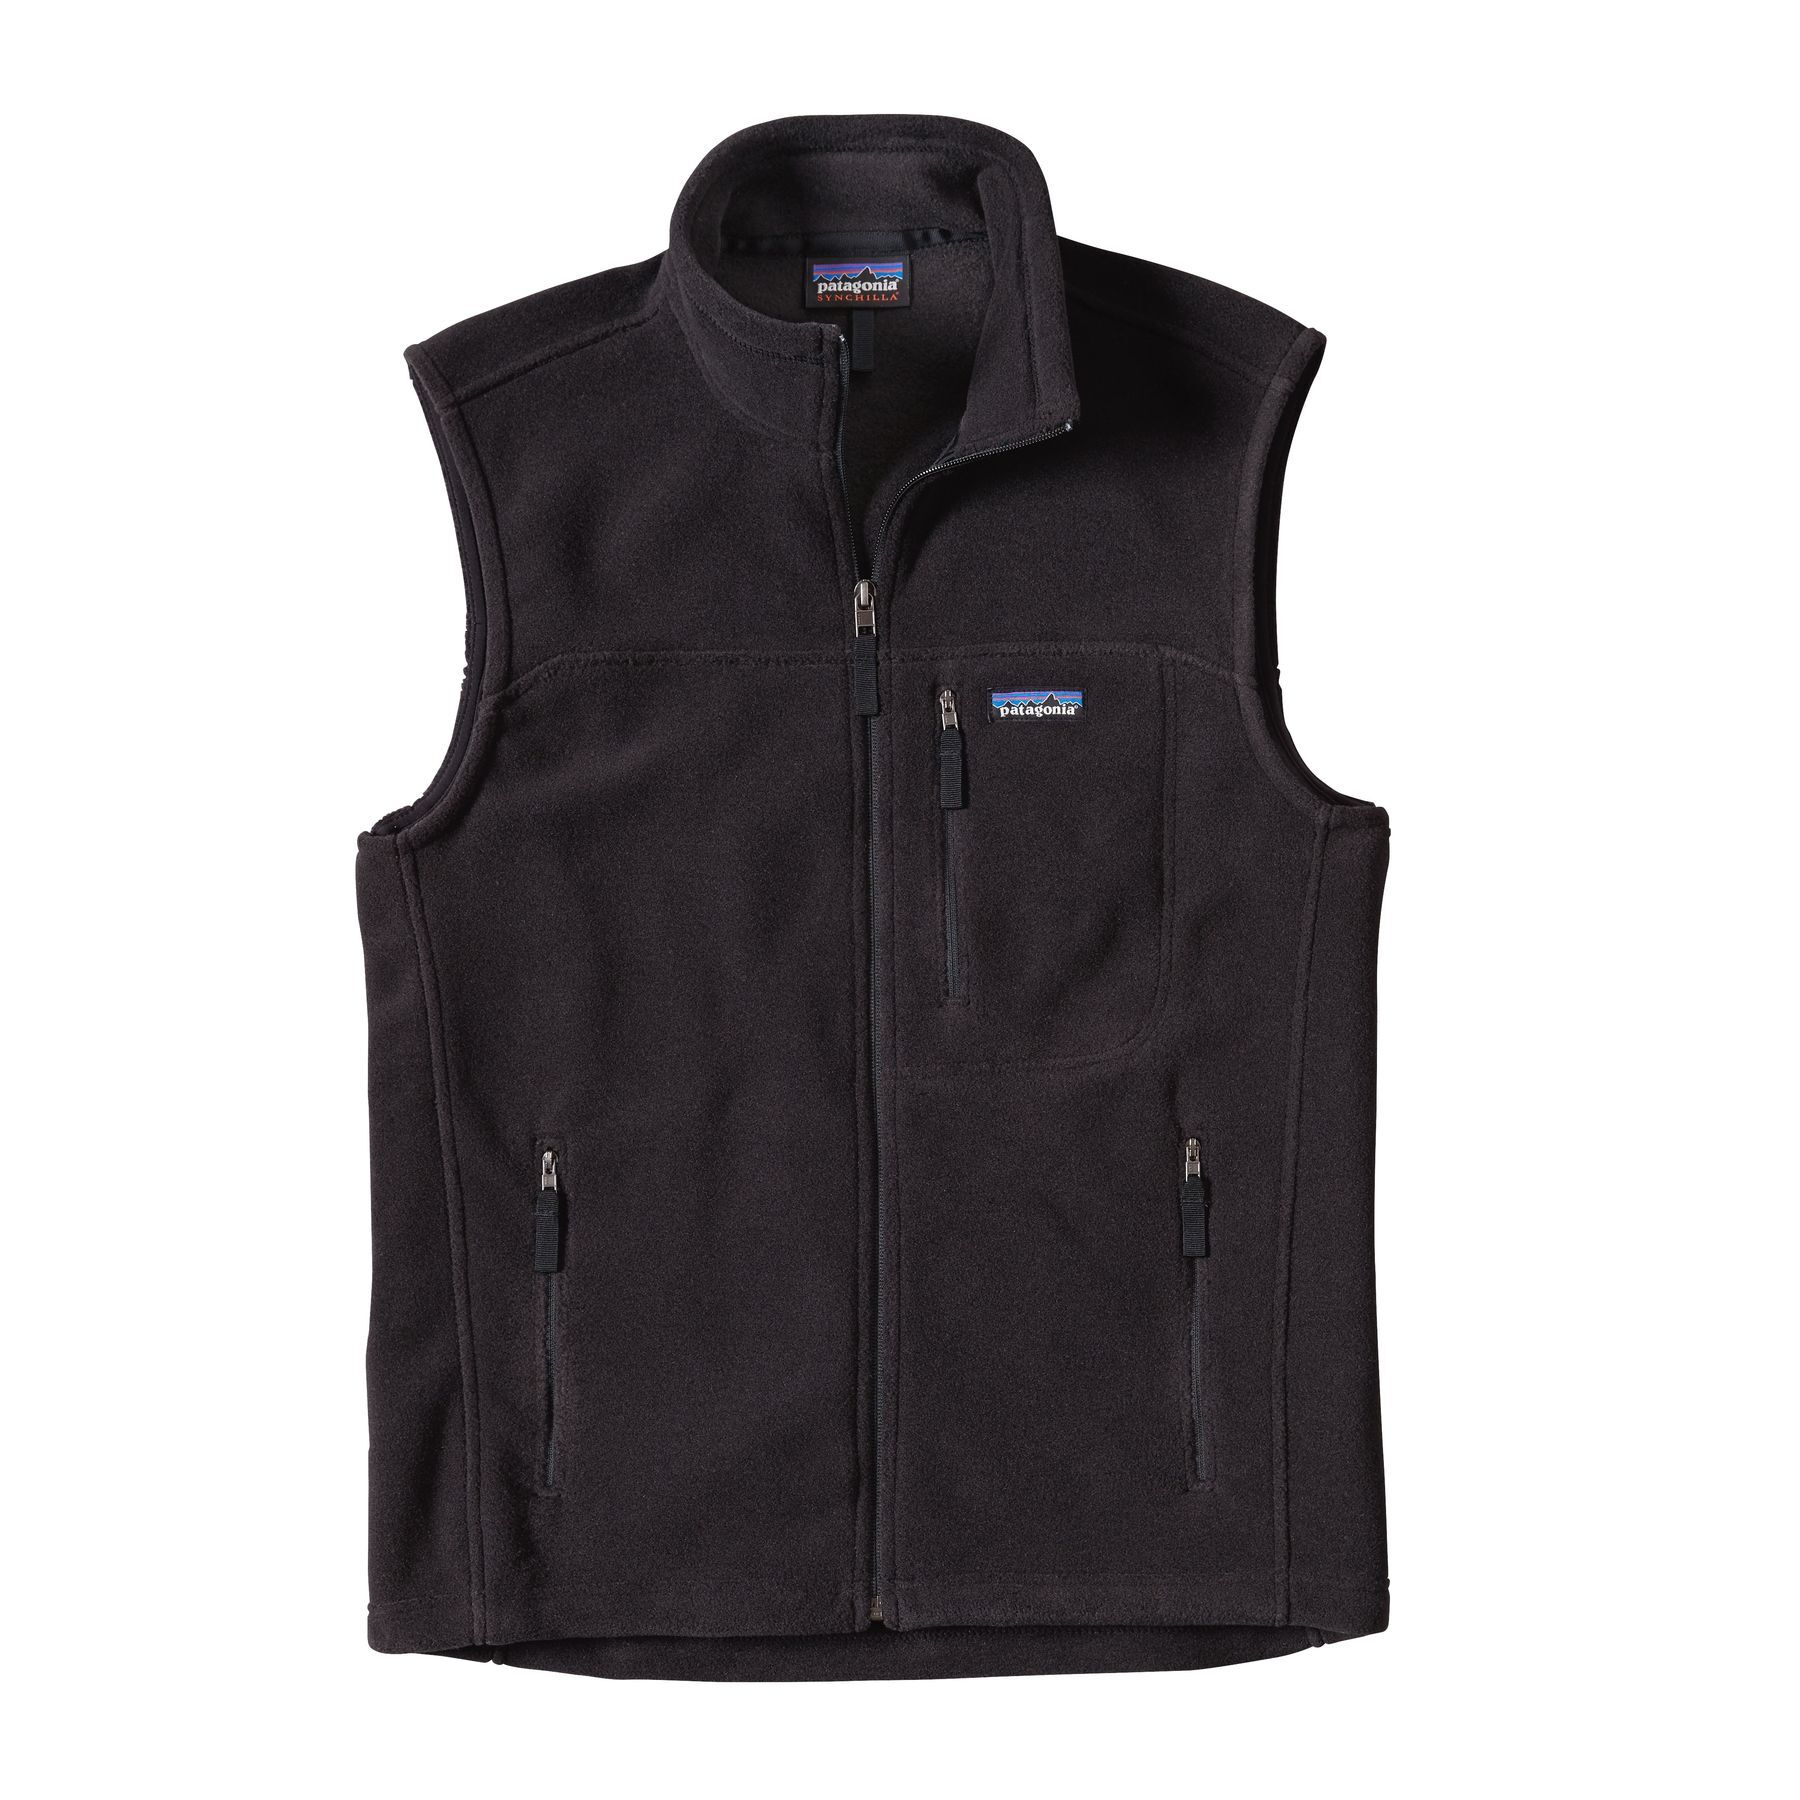 Patagonia - Classic Synchilla® - Fleece vest - Men's